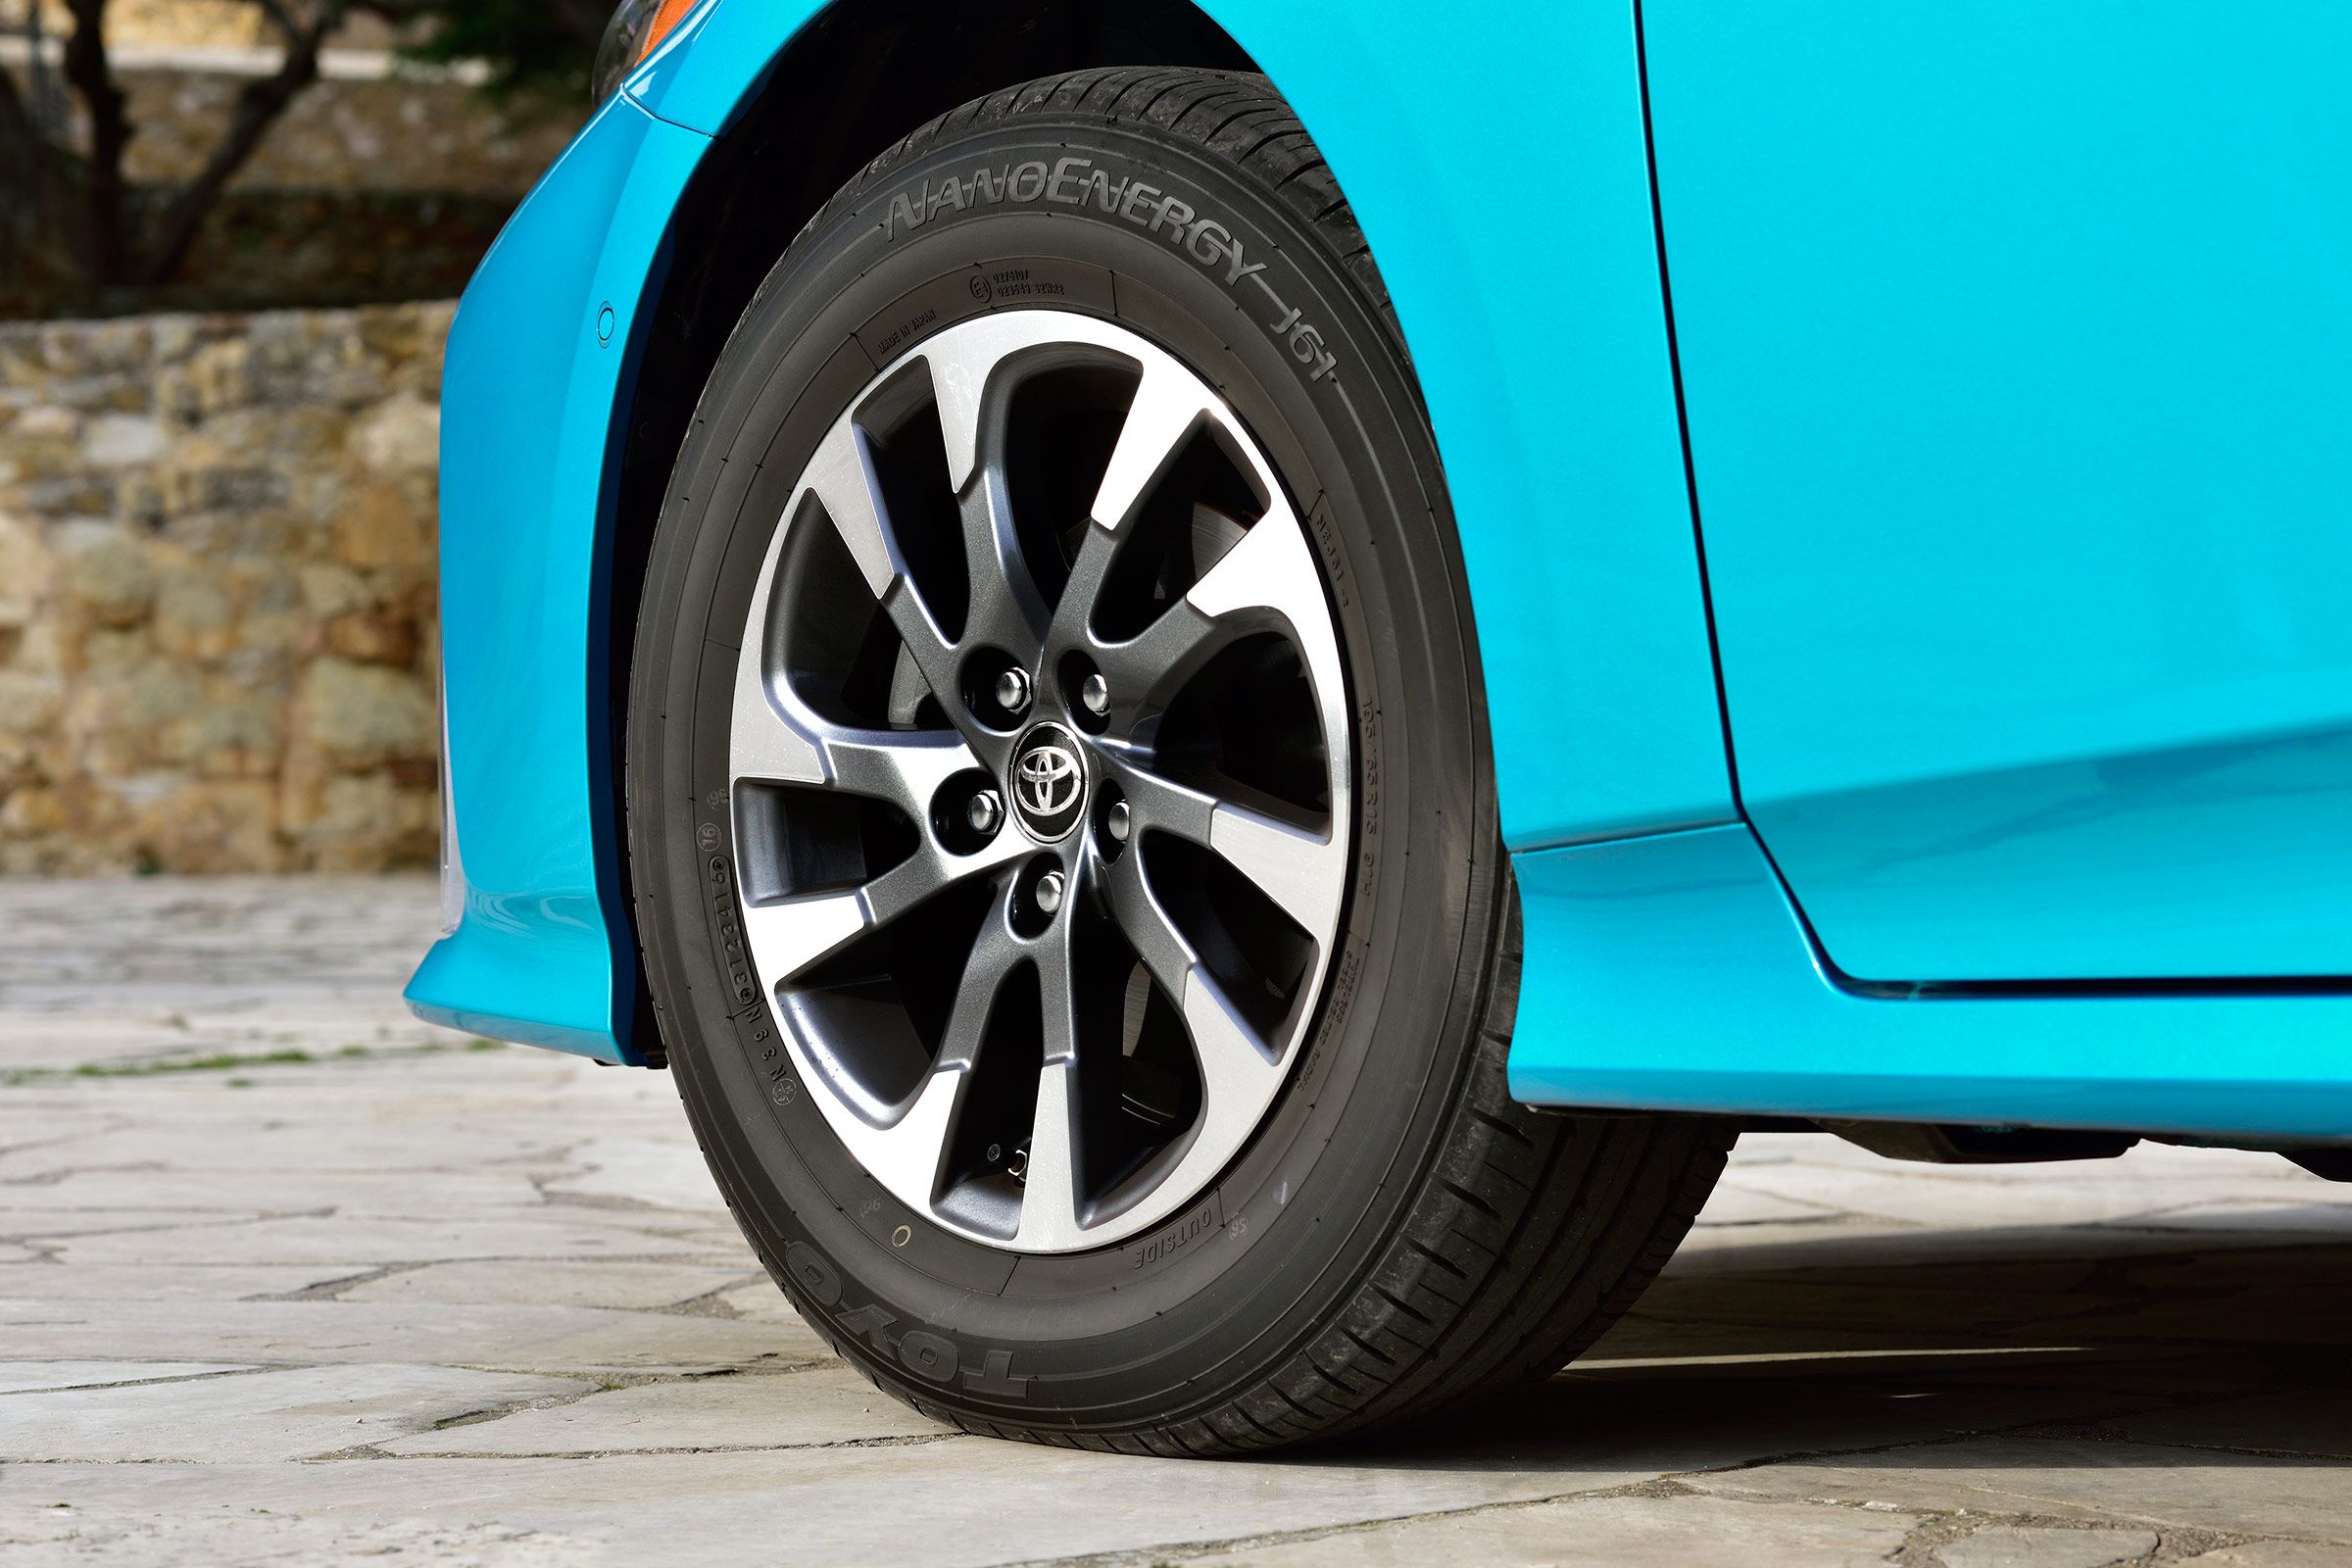 2017 Toyota Prius Blue Exterior View Wheel Trim (View 60 of 64)